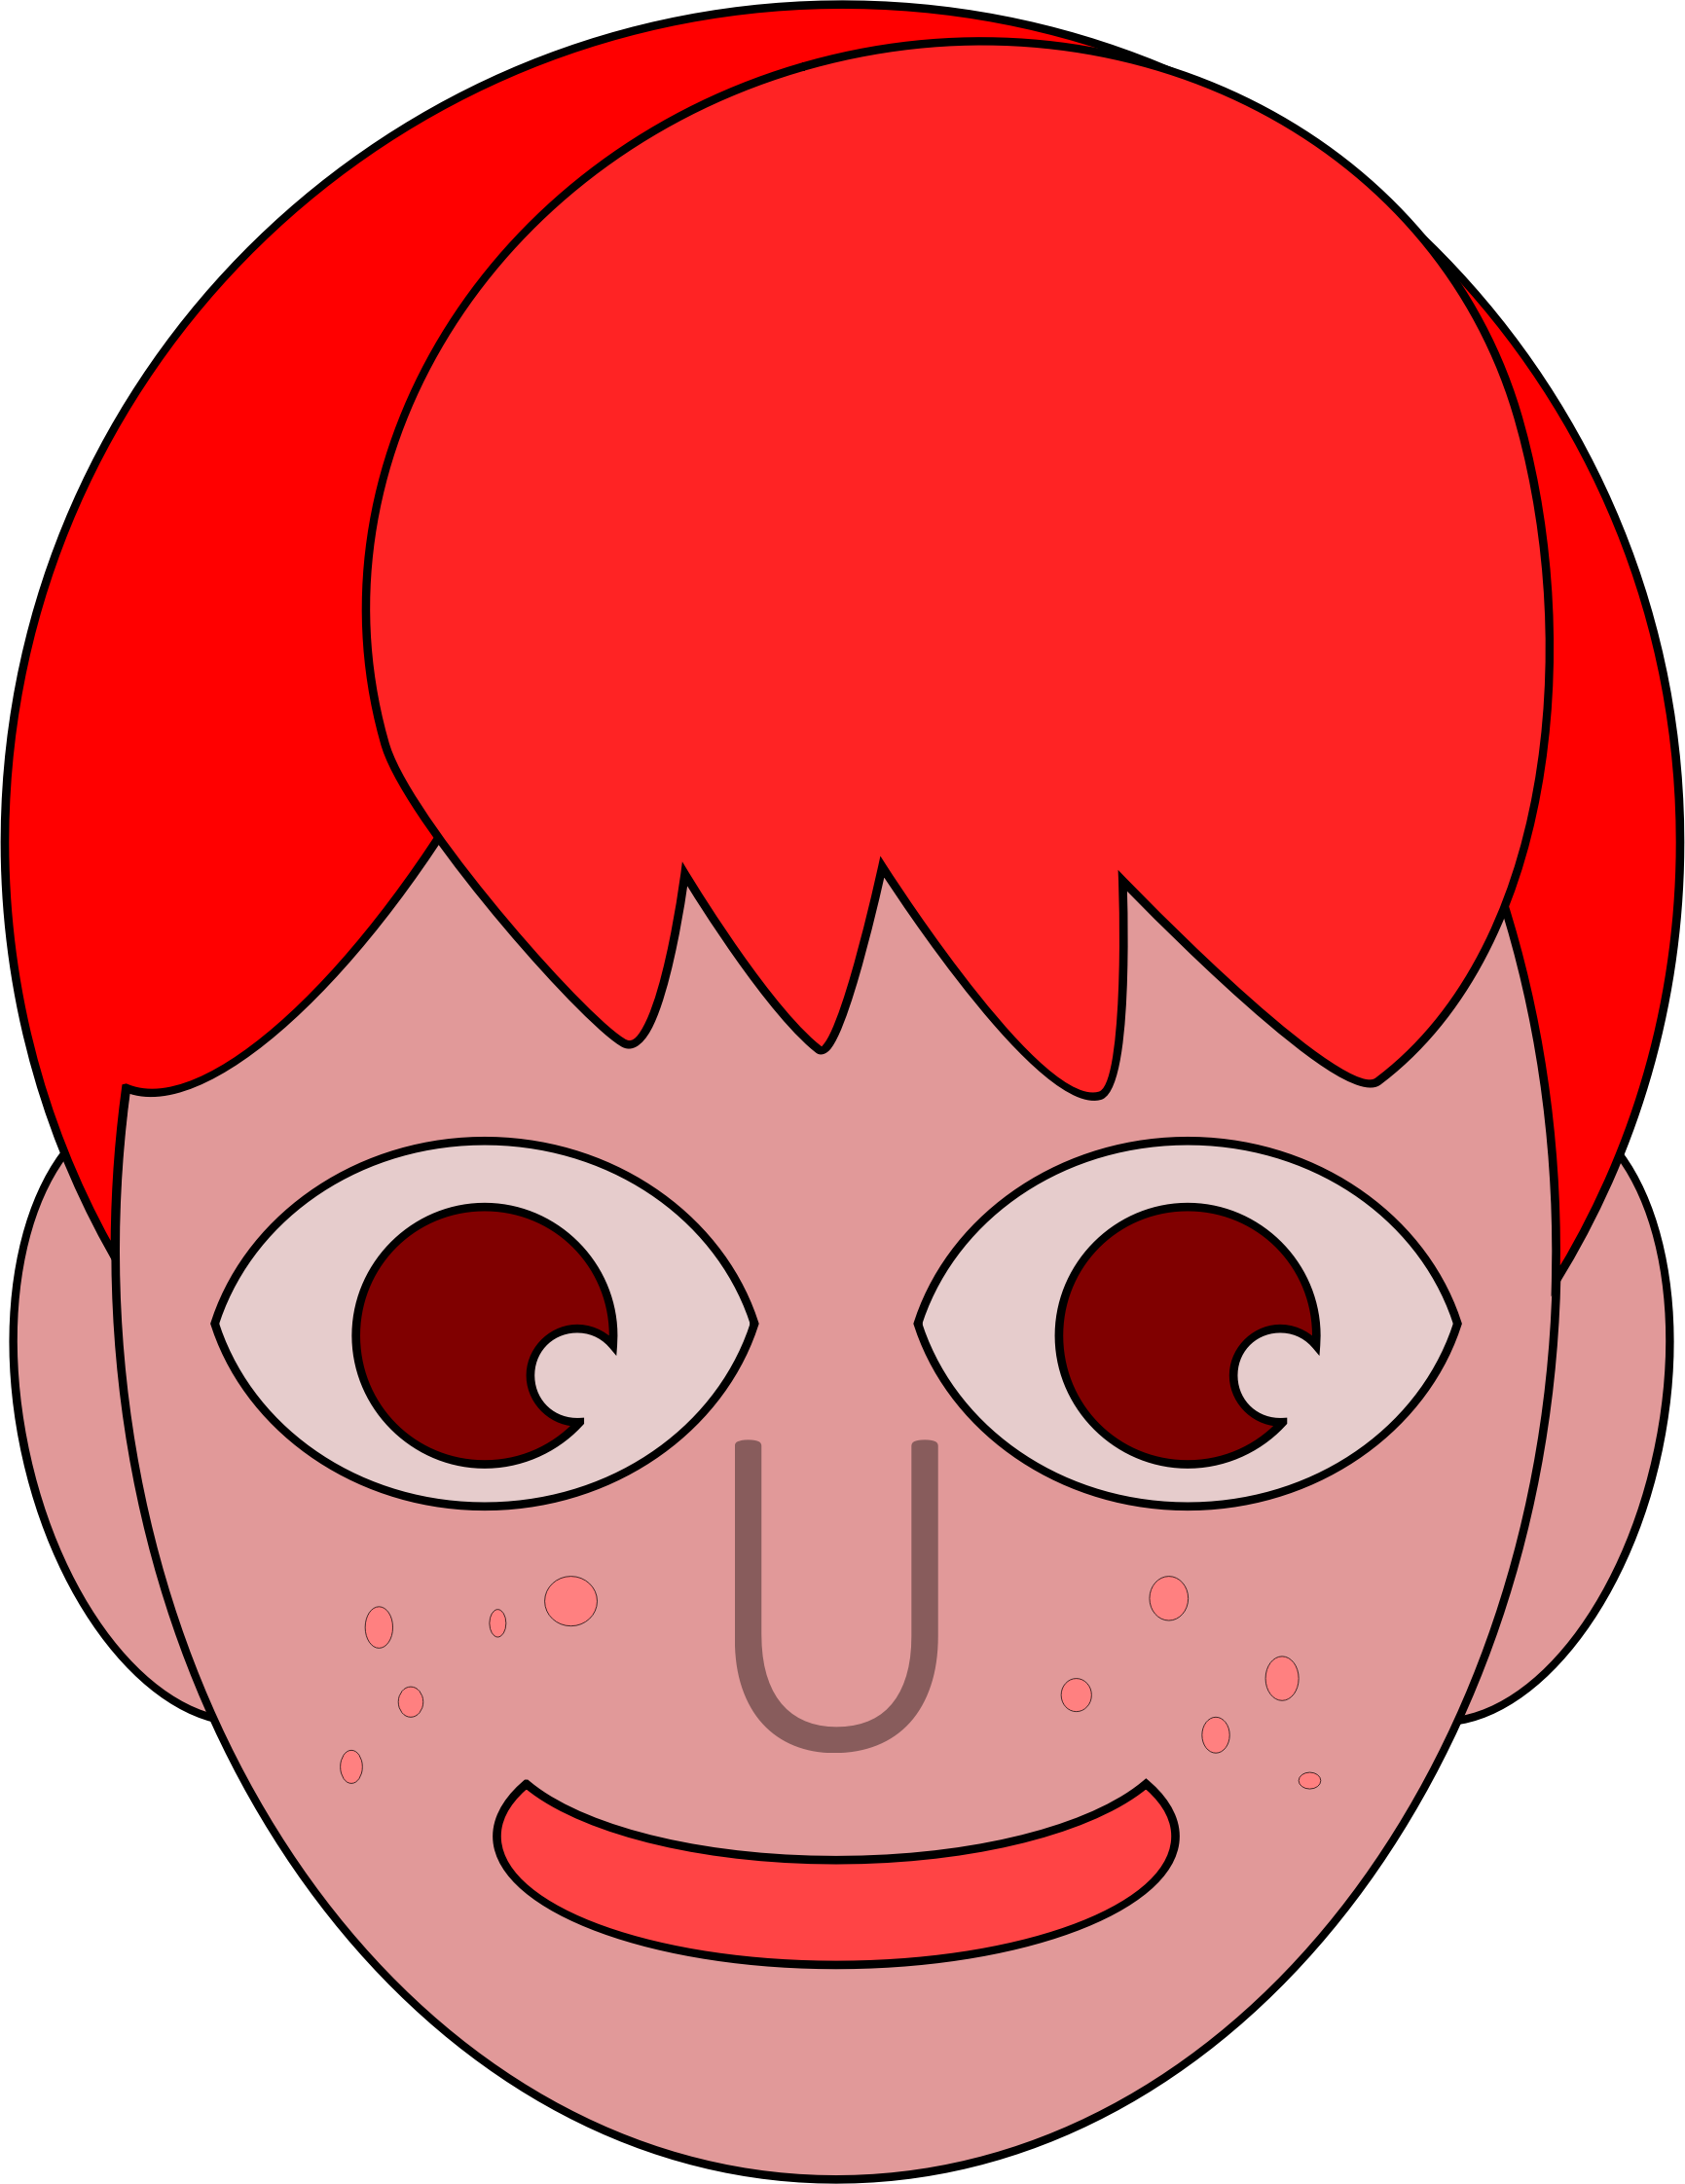 Redhead with eyes big. Nerd clipart brown hair brown eye